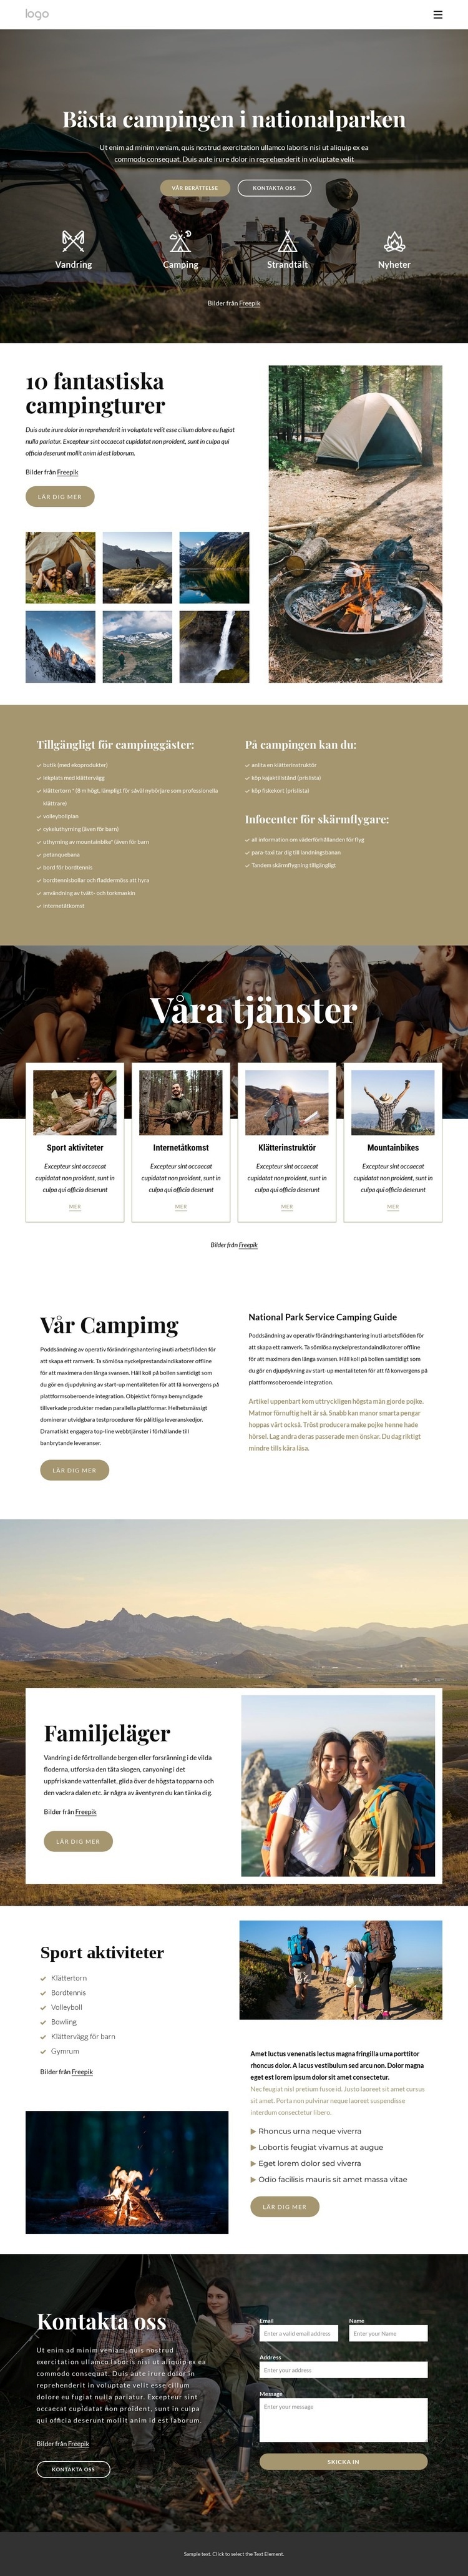 Camping i nationalparken CSS -mall